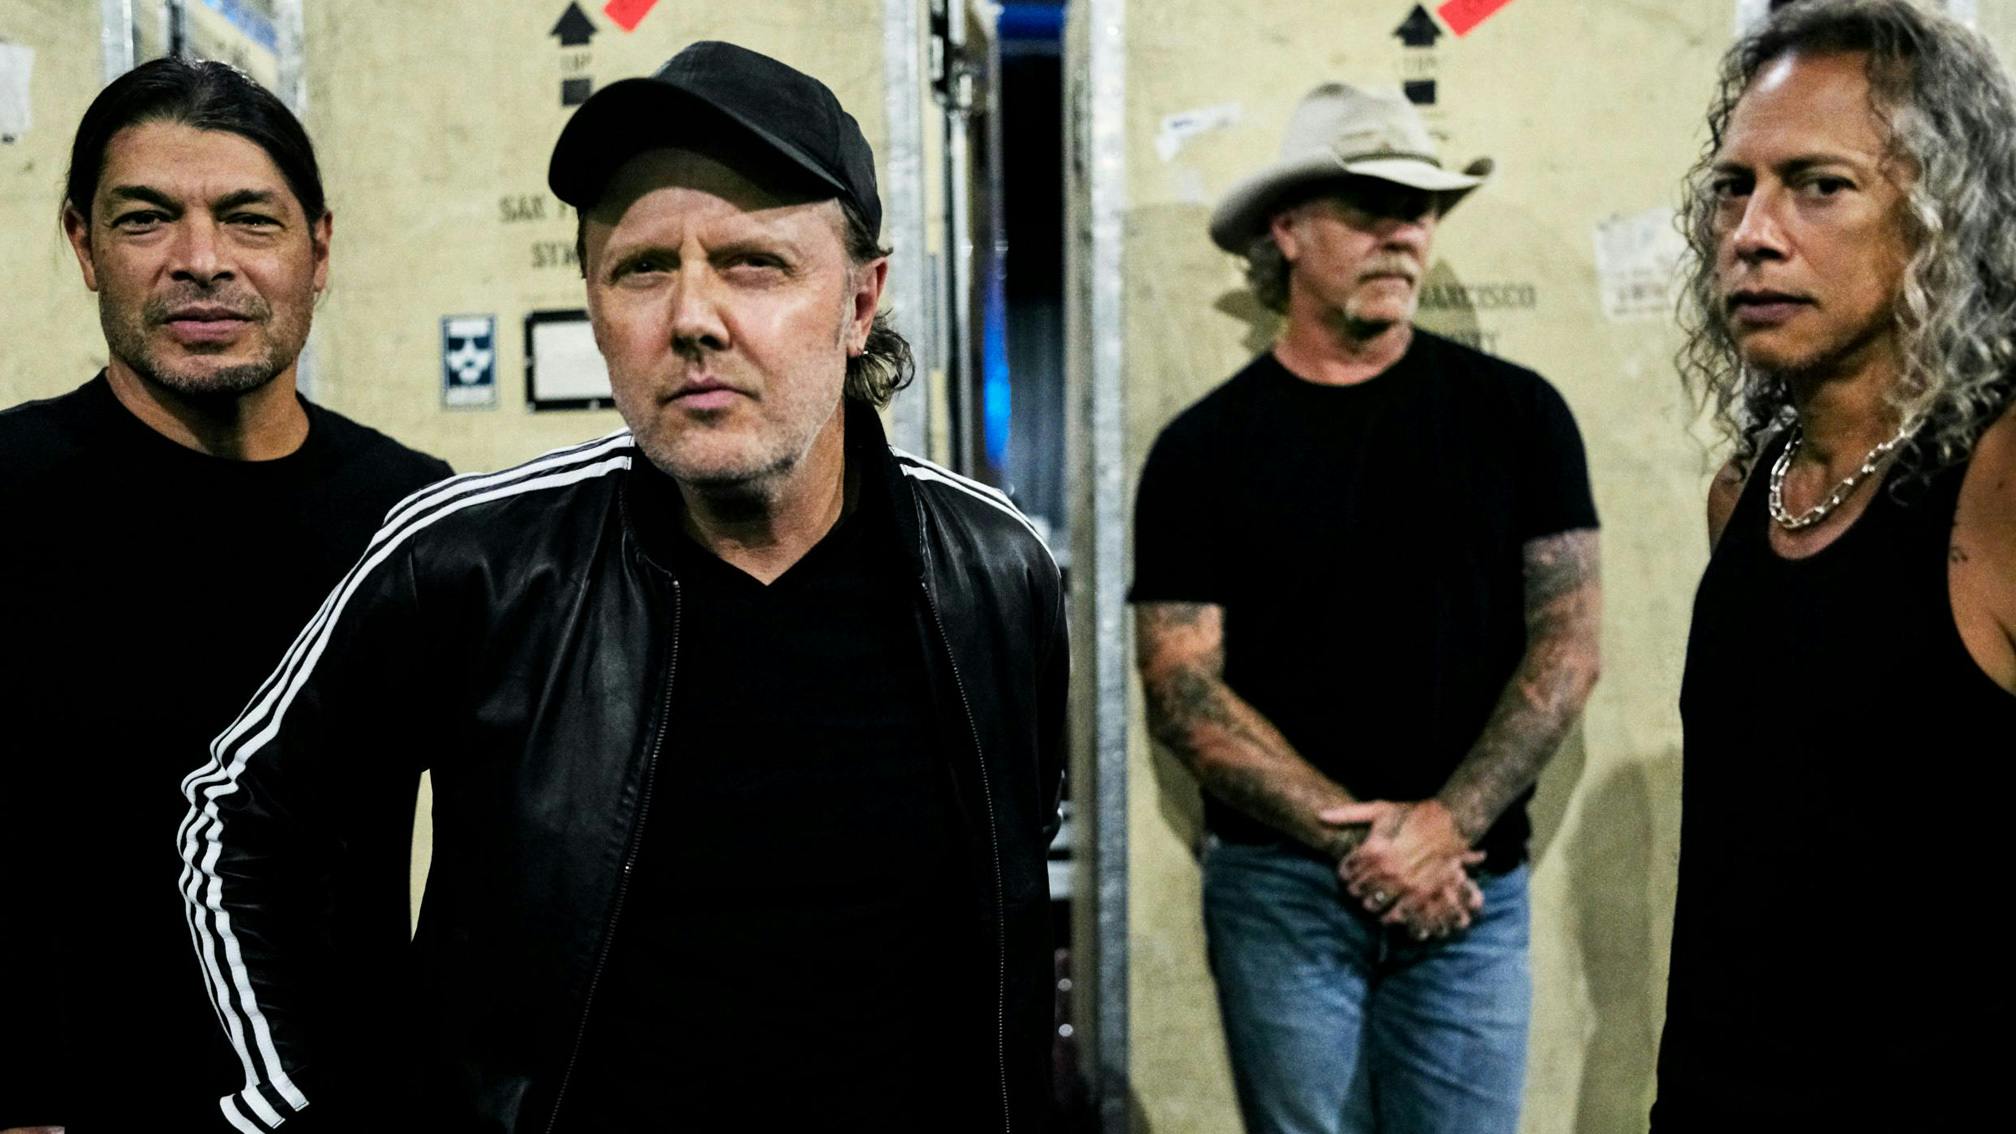 Metallica announce 40th anniversary celebration gigs